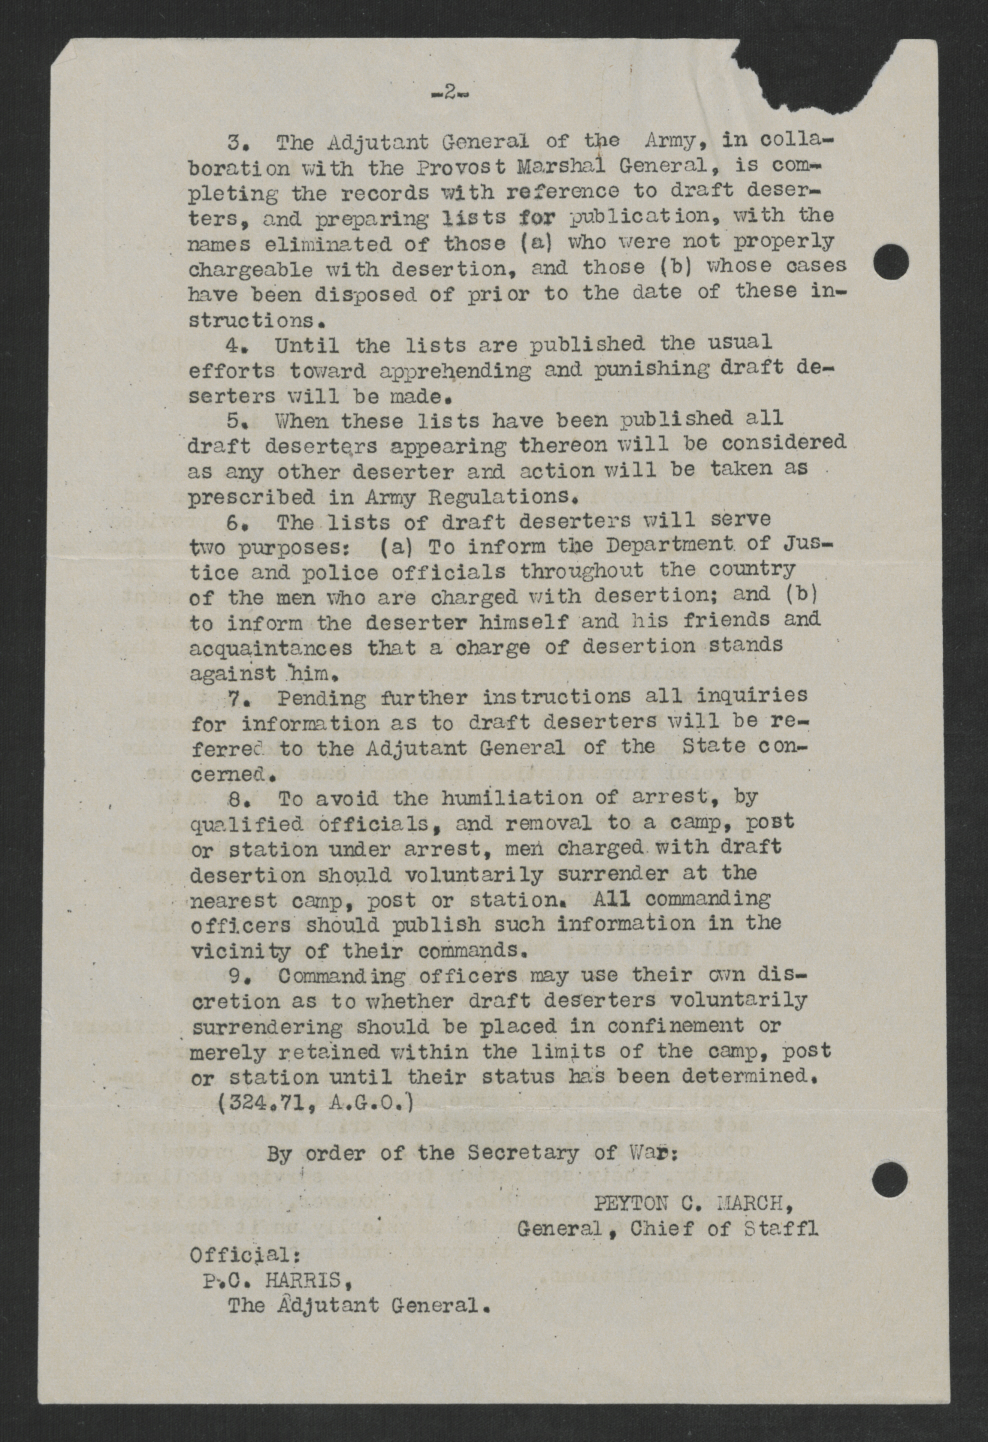 War Department Circular No. 75, February 10, 1919, page 2